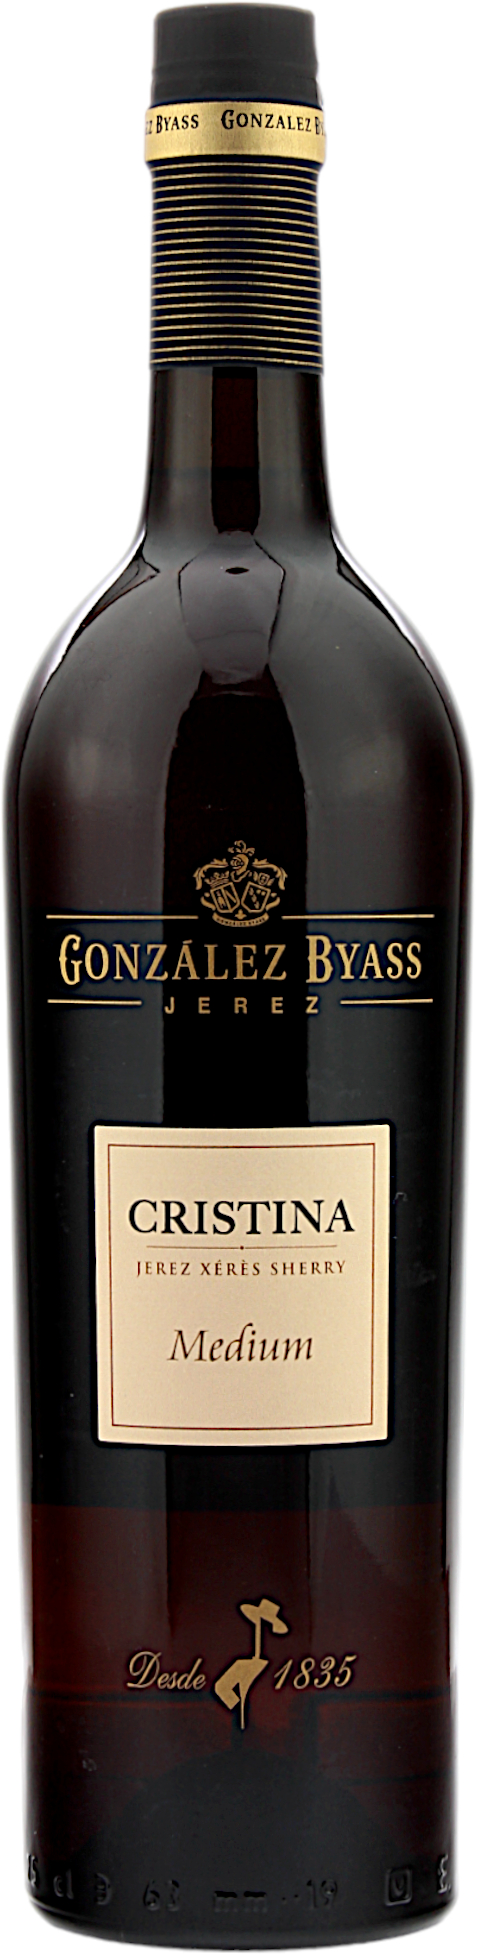 Gonzales Byass Cristina Medium Sherry 17.5% 0,75l